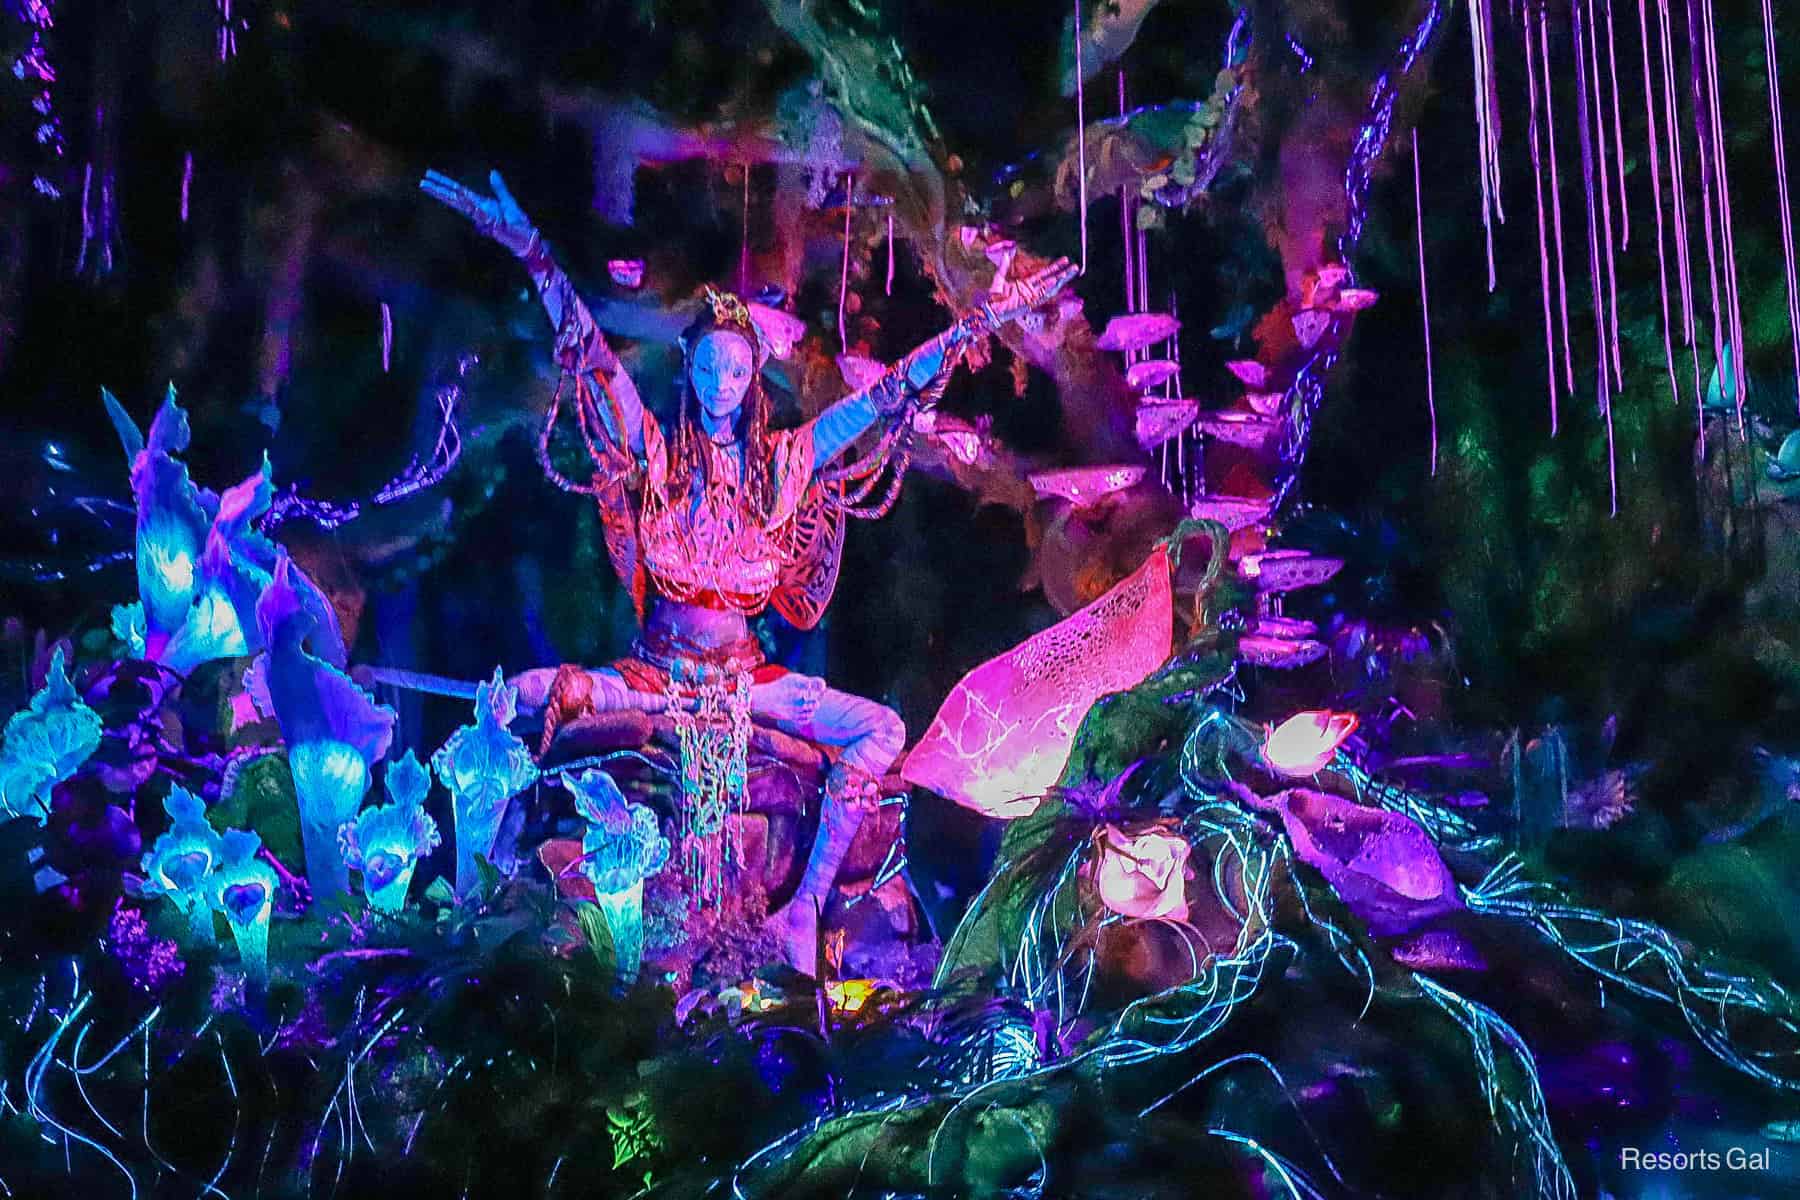 the Shaman of Songs animatronic in Pandora World of Avatar 